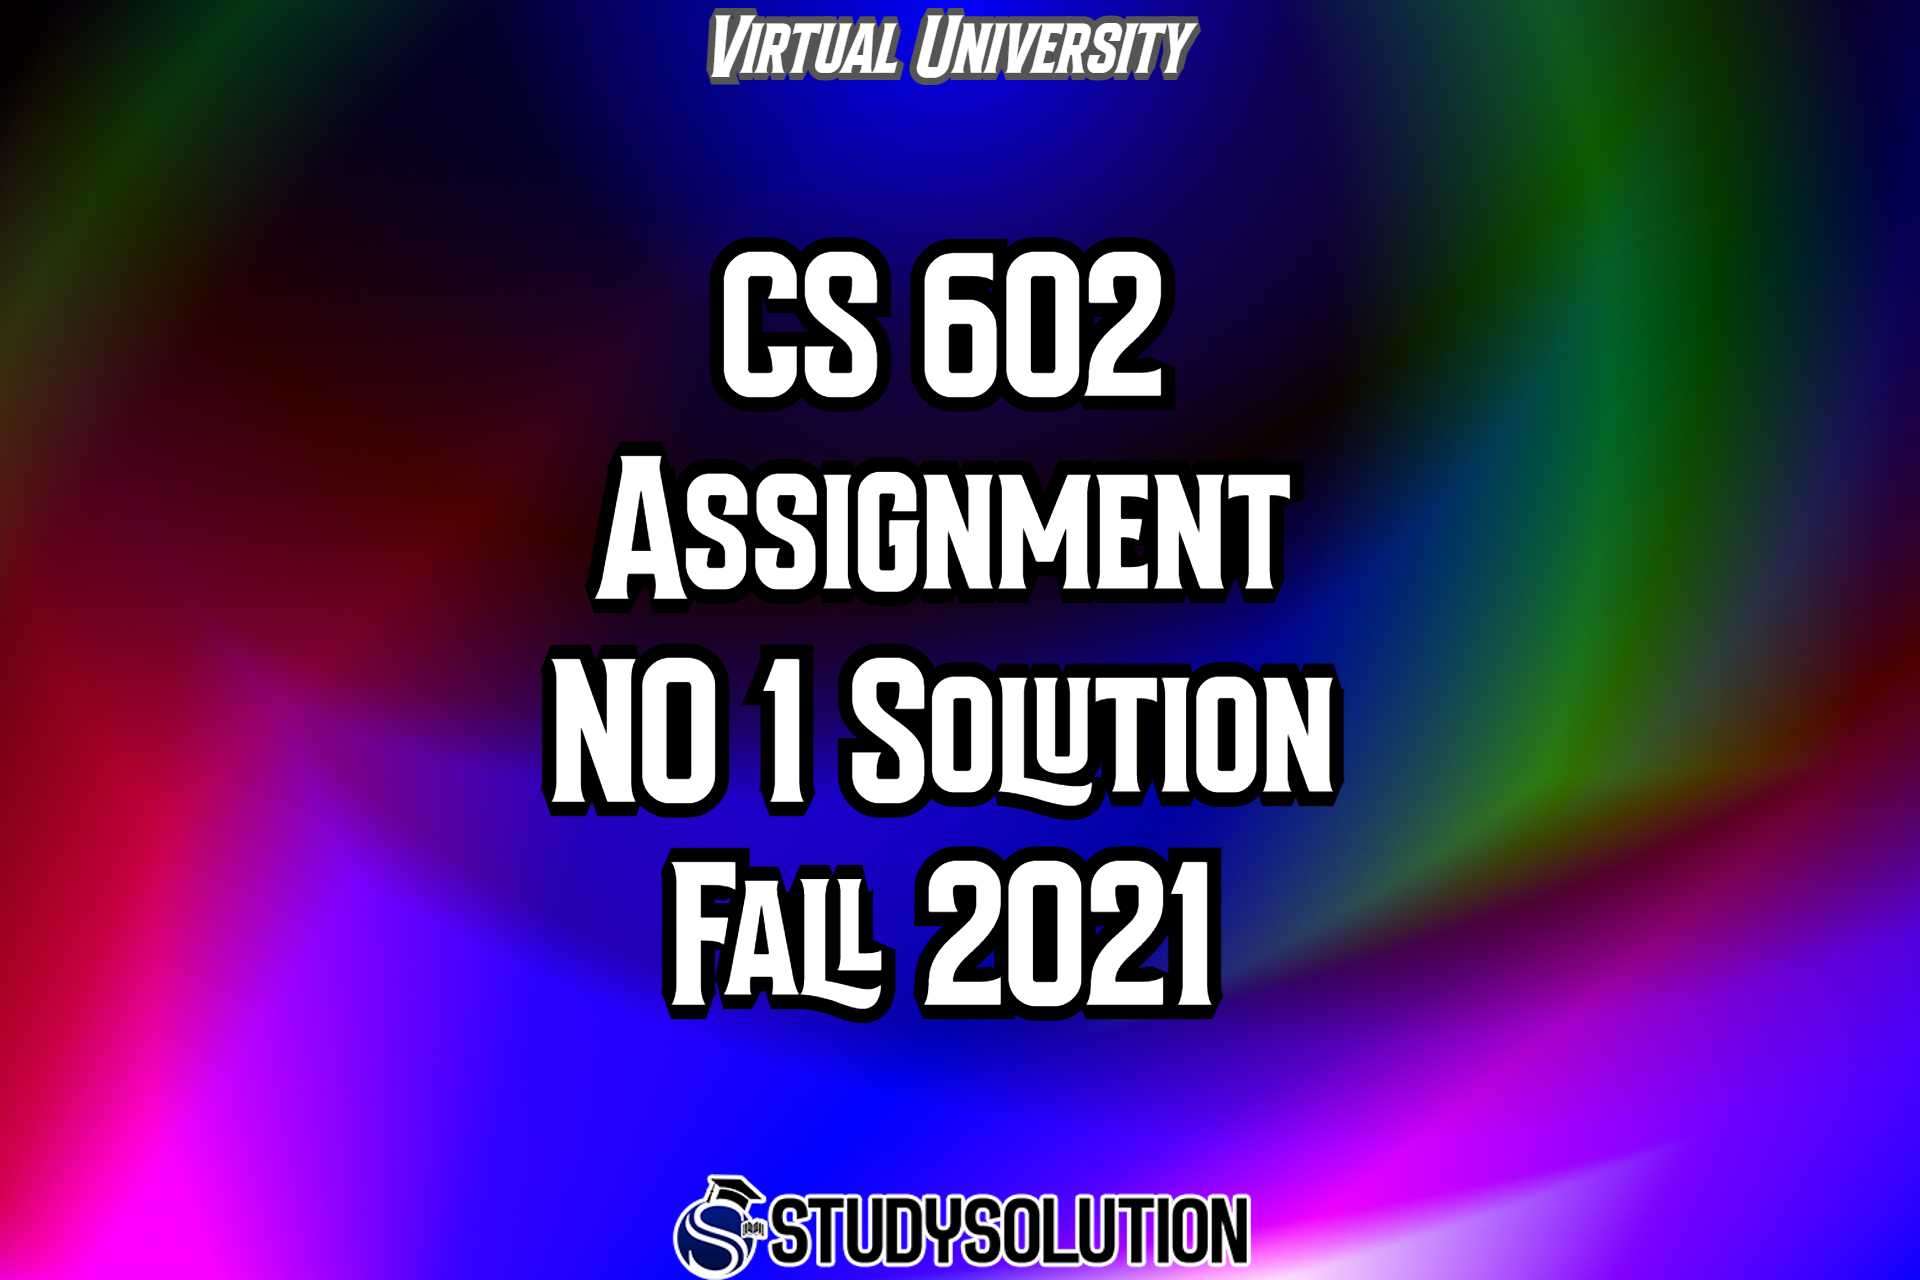 CS602 Assignment NO 1 Solution Fall 2021